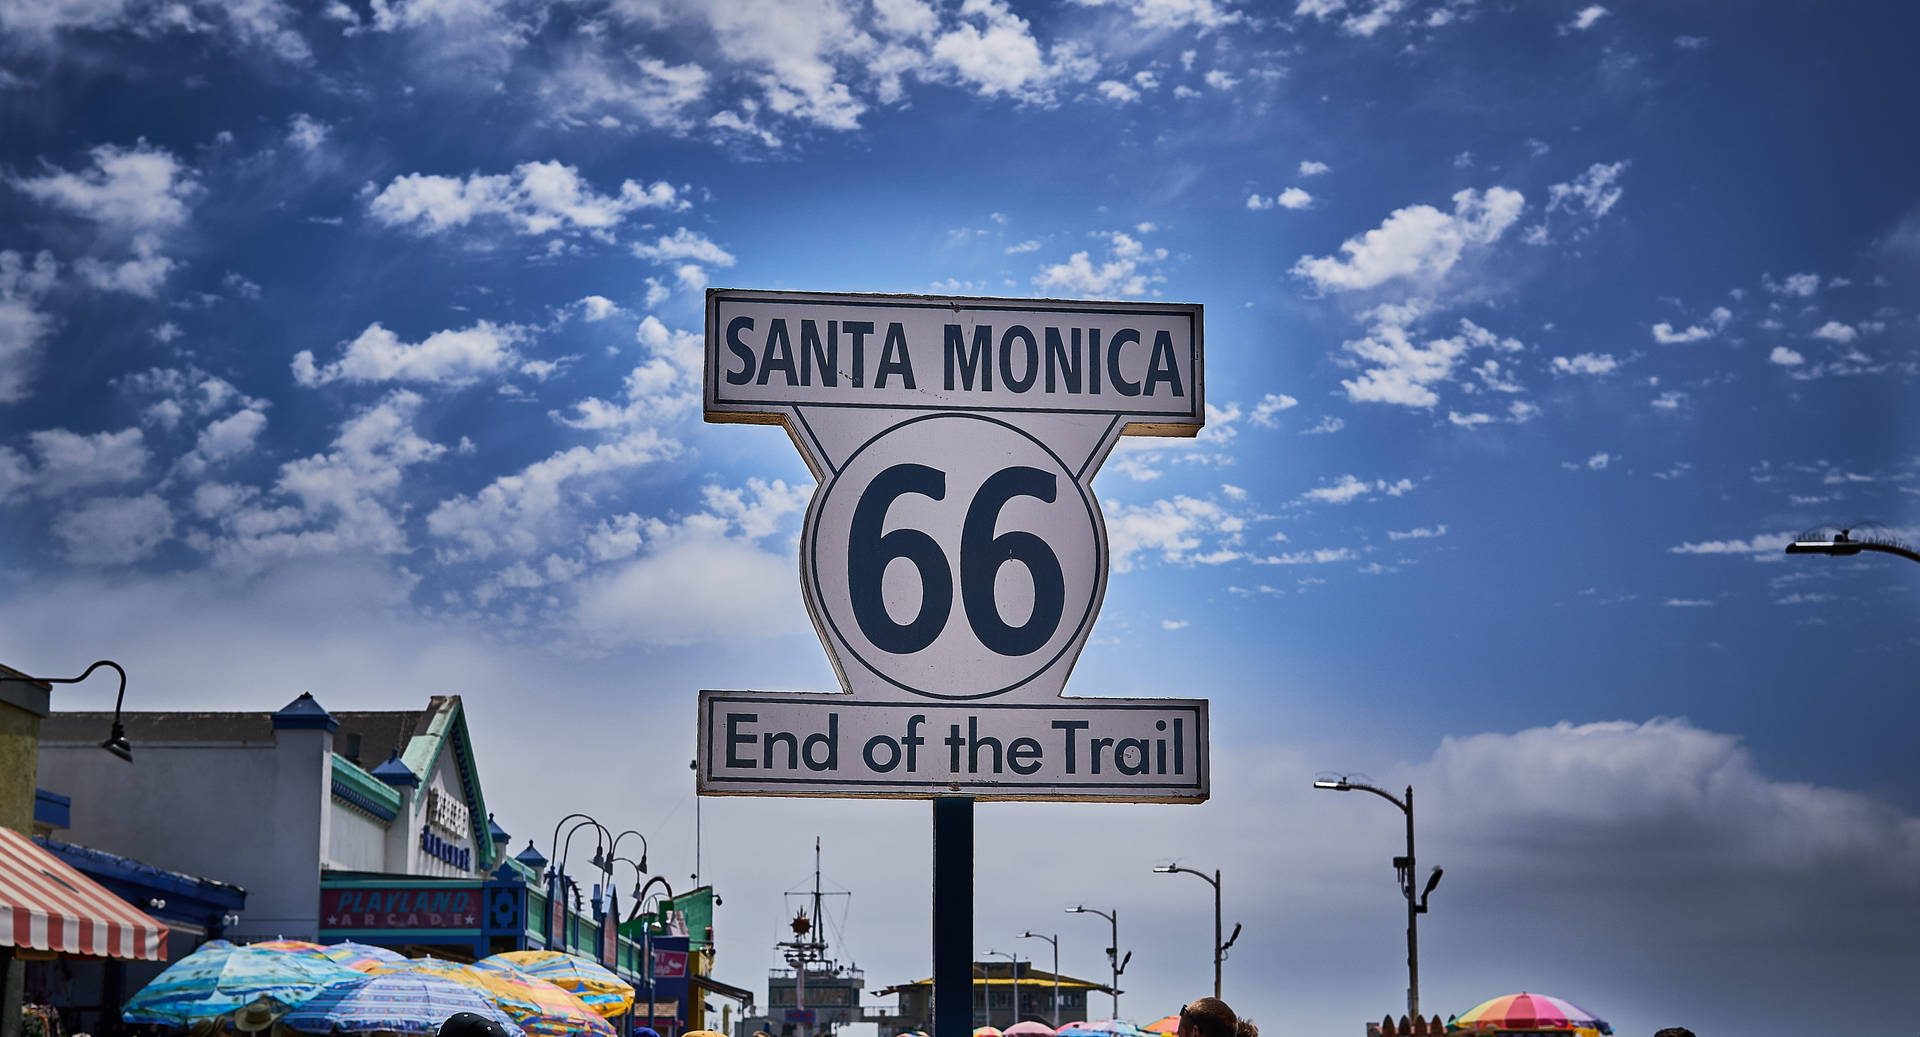 Santa Monica Route 66 Marker Background